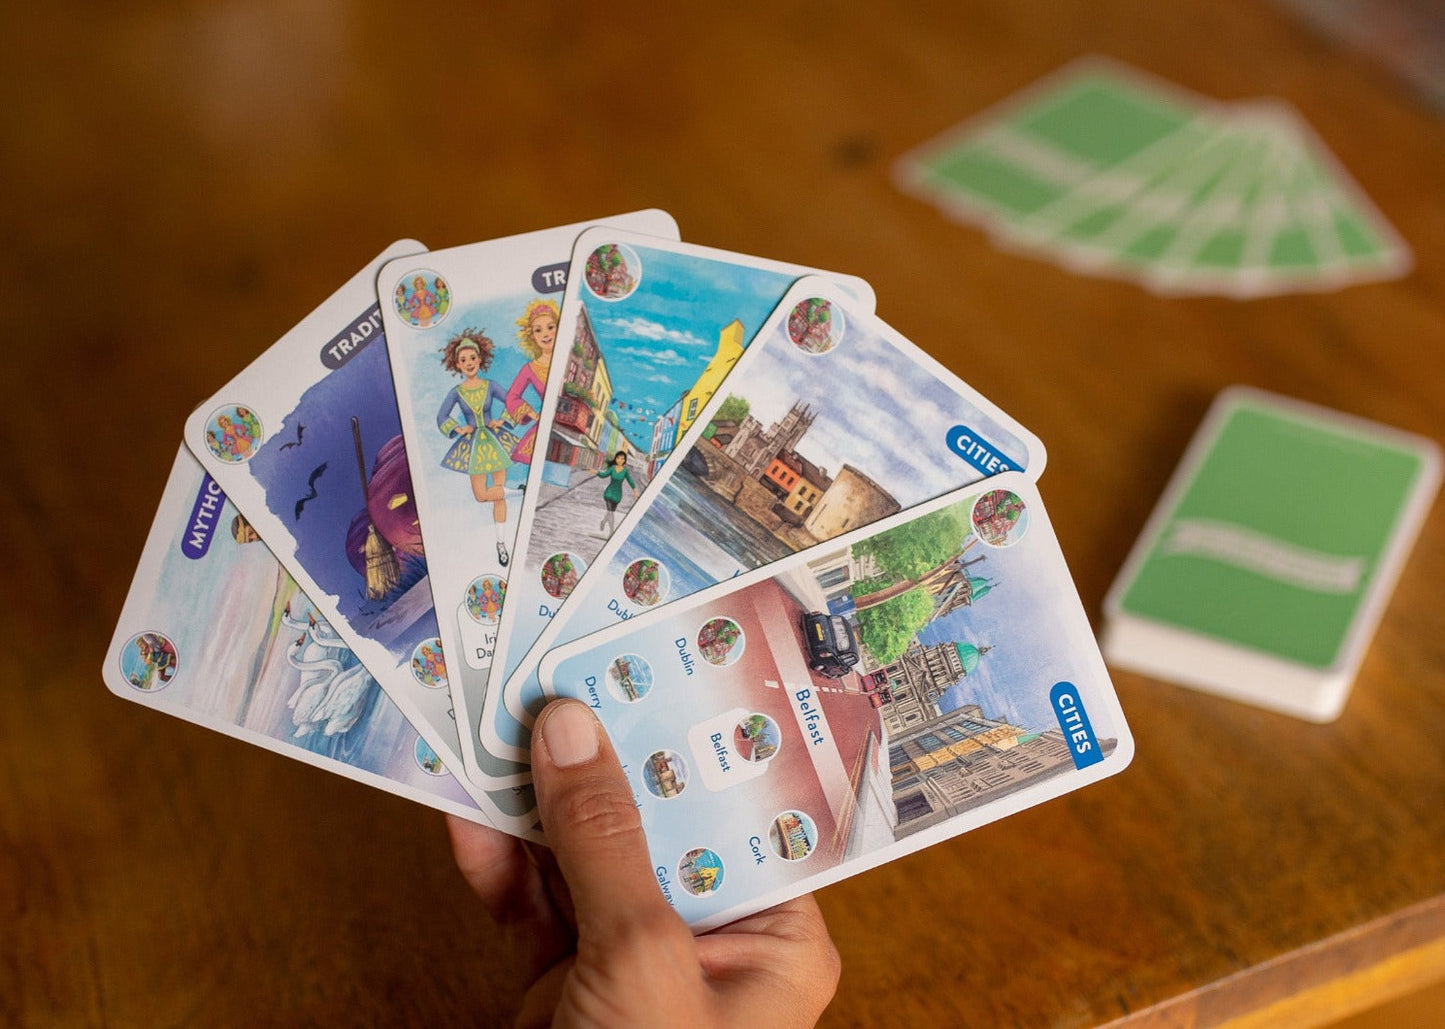 Happy Families - Exploring Ireland card game